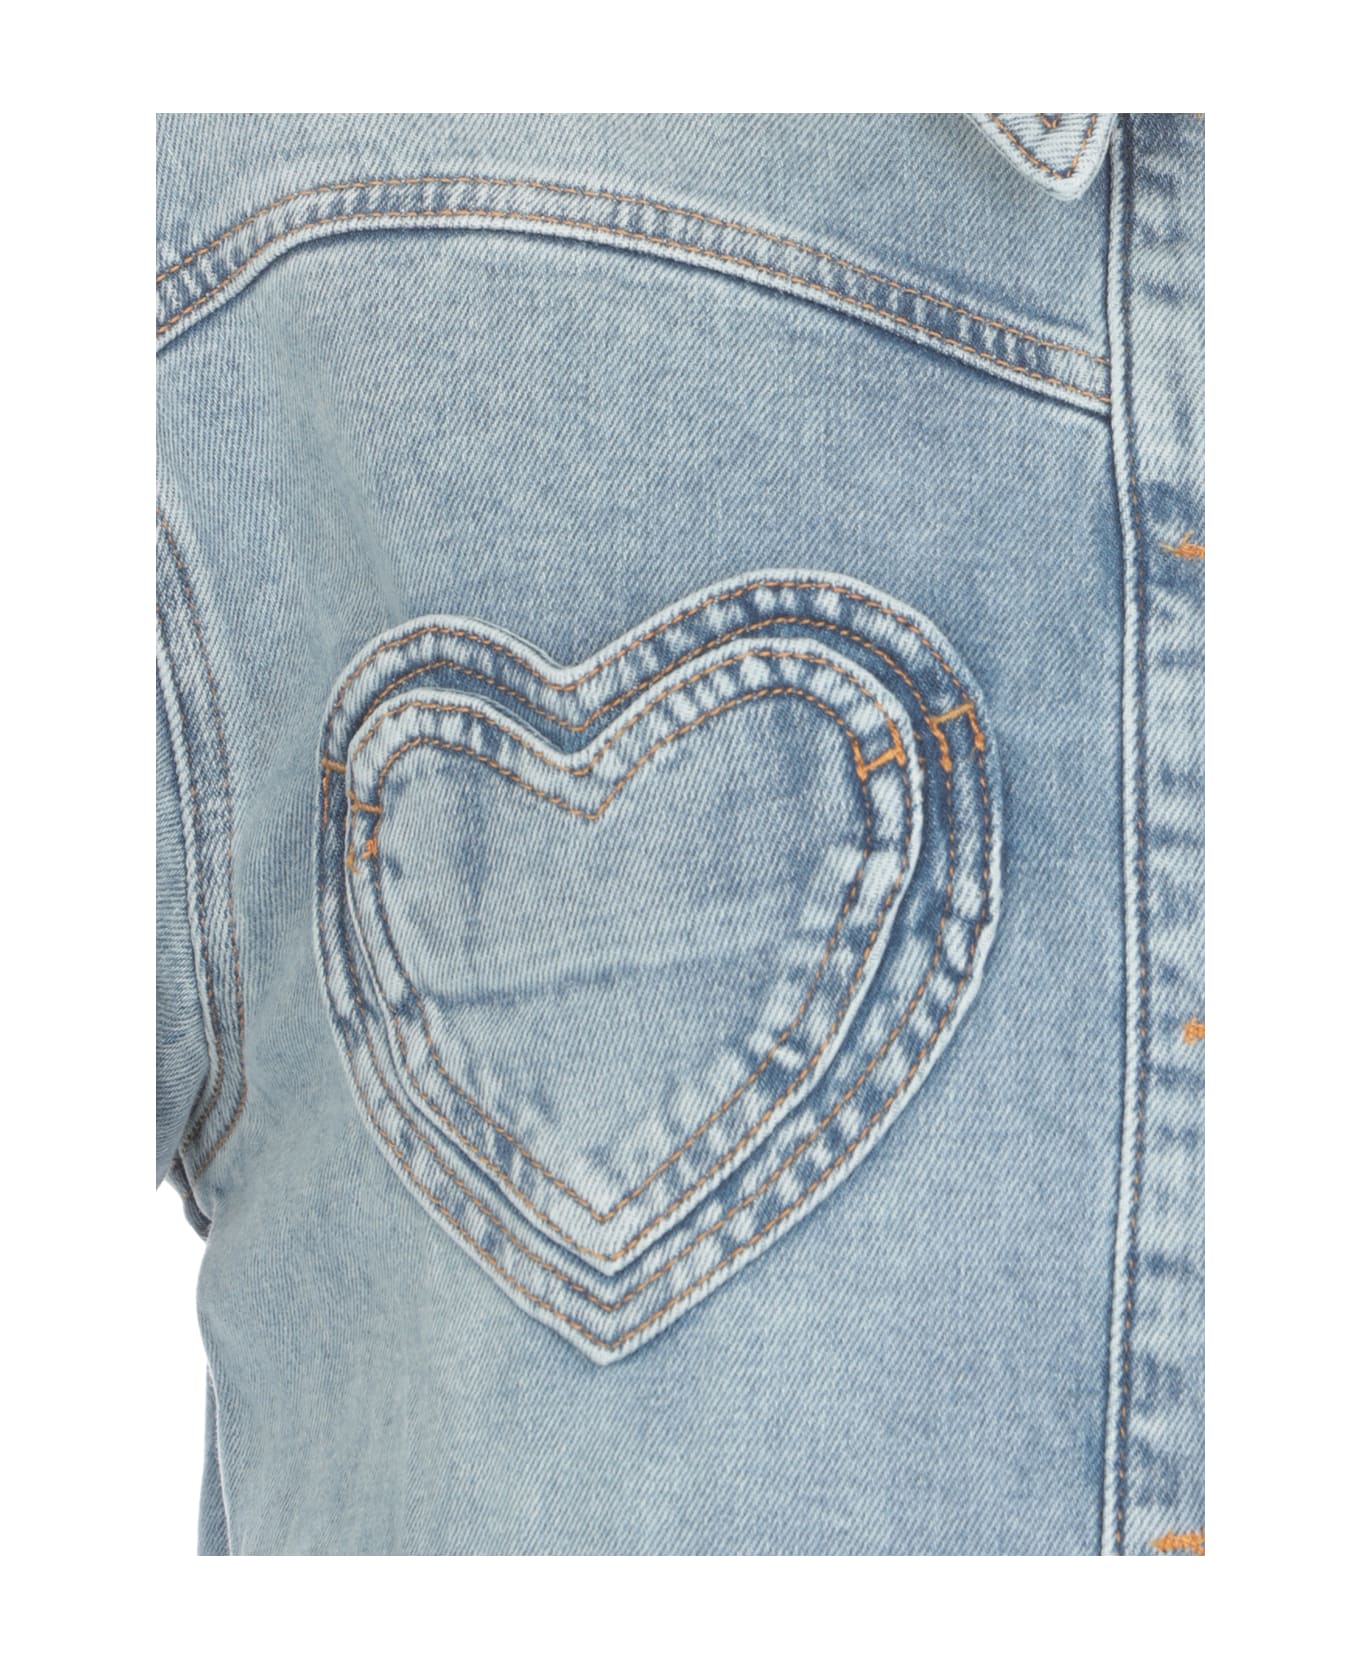 M05CH1N0 Jeans Heart Pockets Denim Jacket - Light Blue